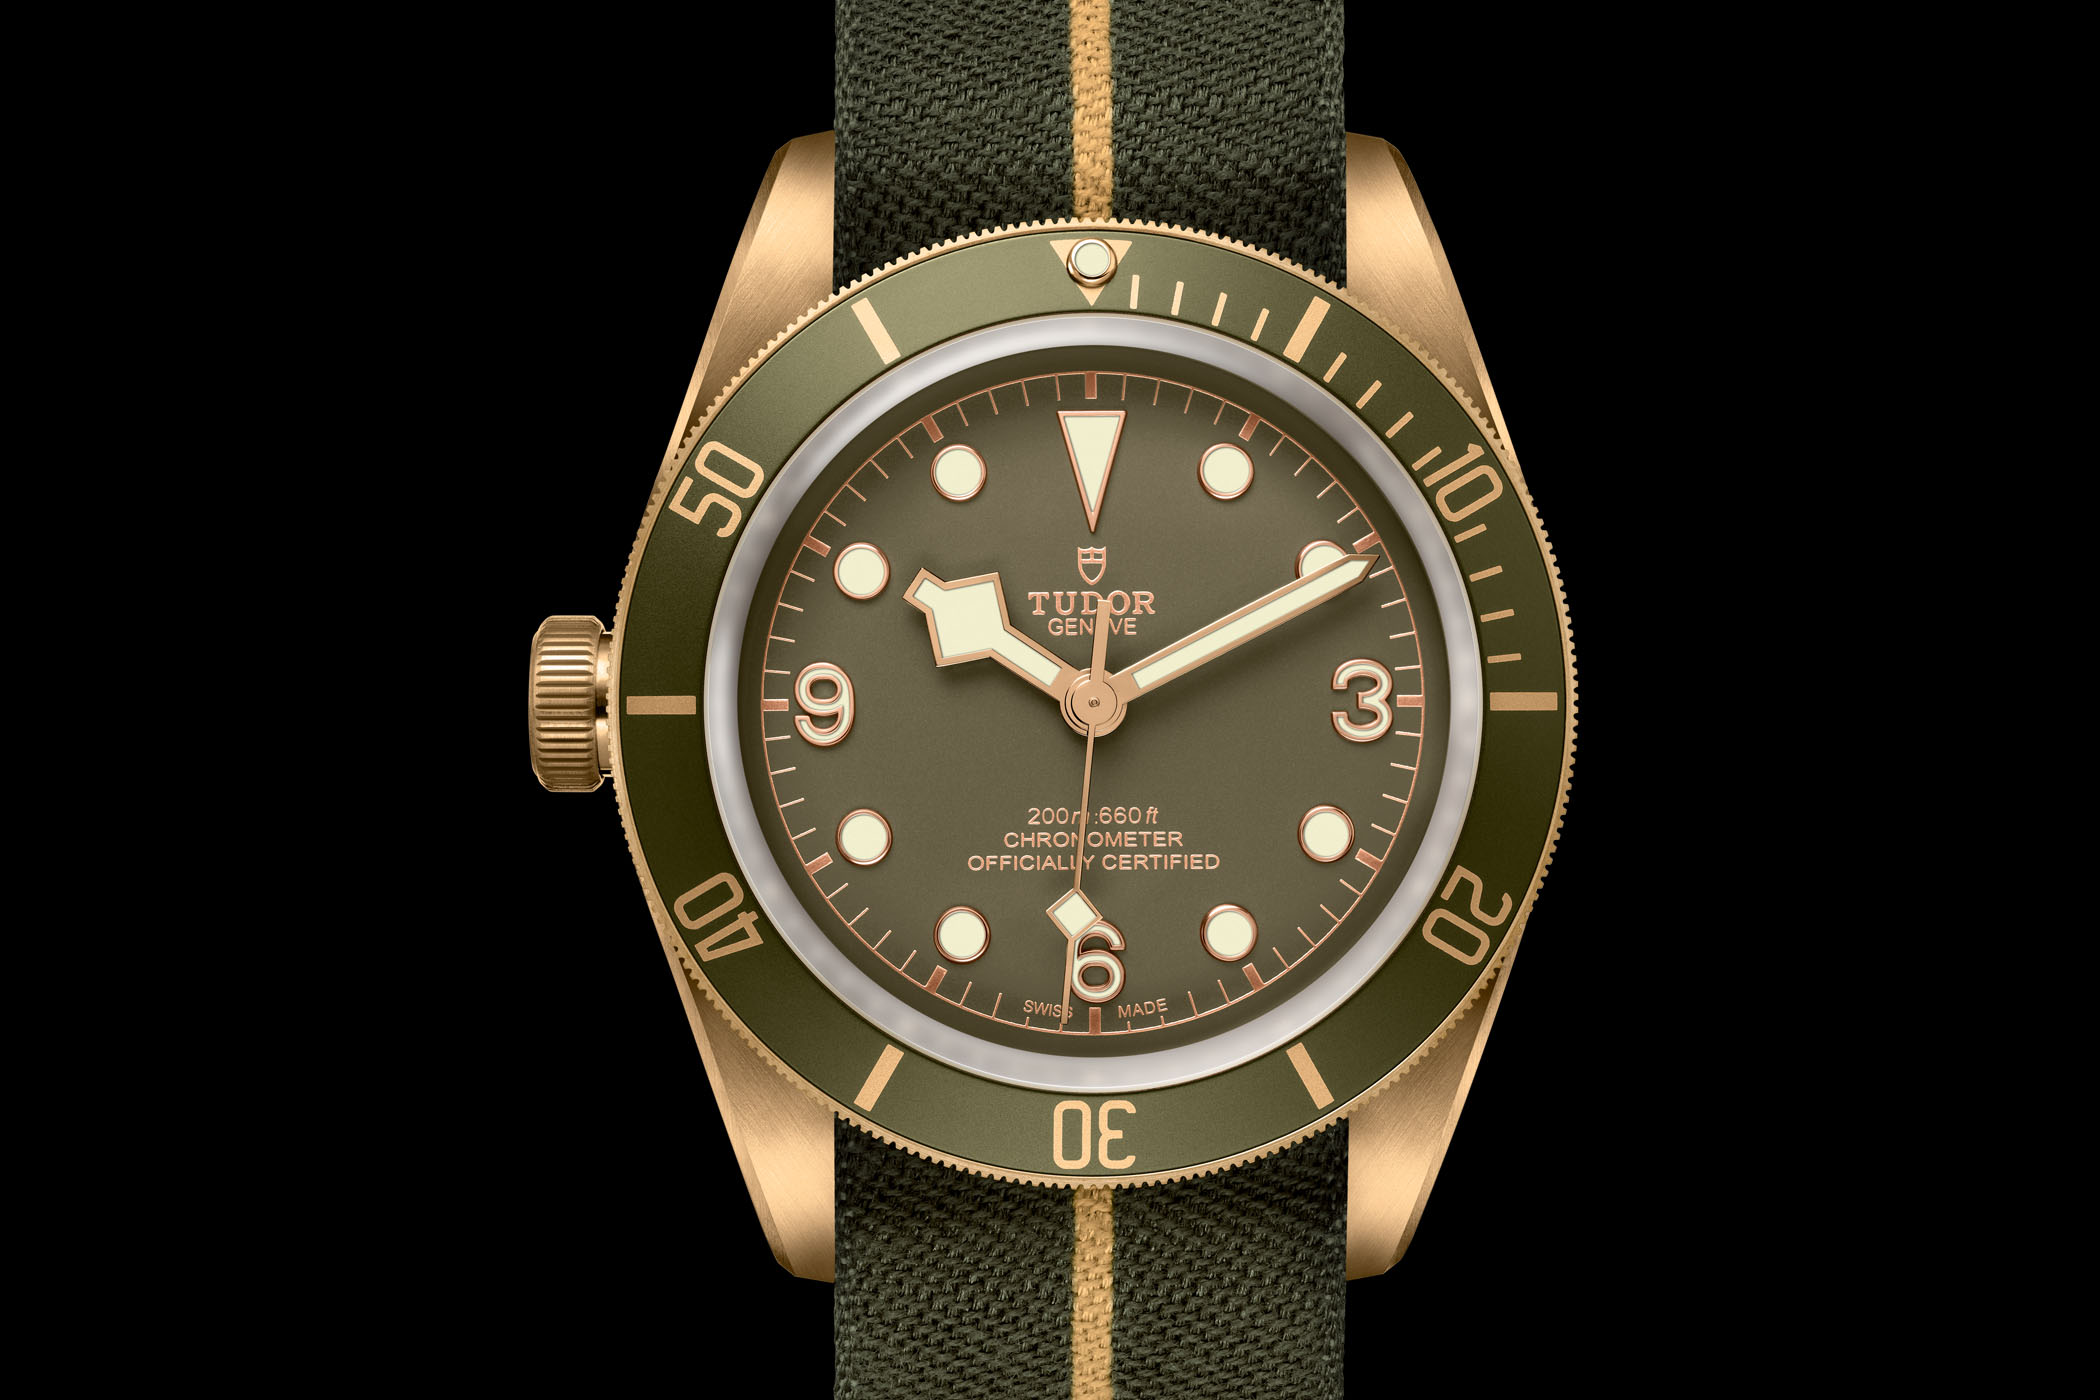 Tudor-Black-Bay-Bronze-One-LHD-khaki-green-dial-Only-Watch-2017-2.jpg&key=17edcf5a07070982de57bfced28b4869089400385322805bd592badcf15118fd